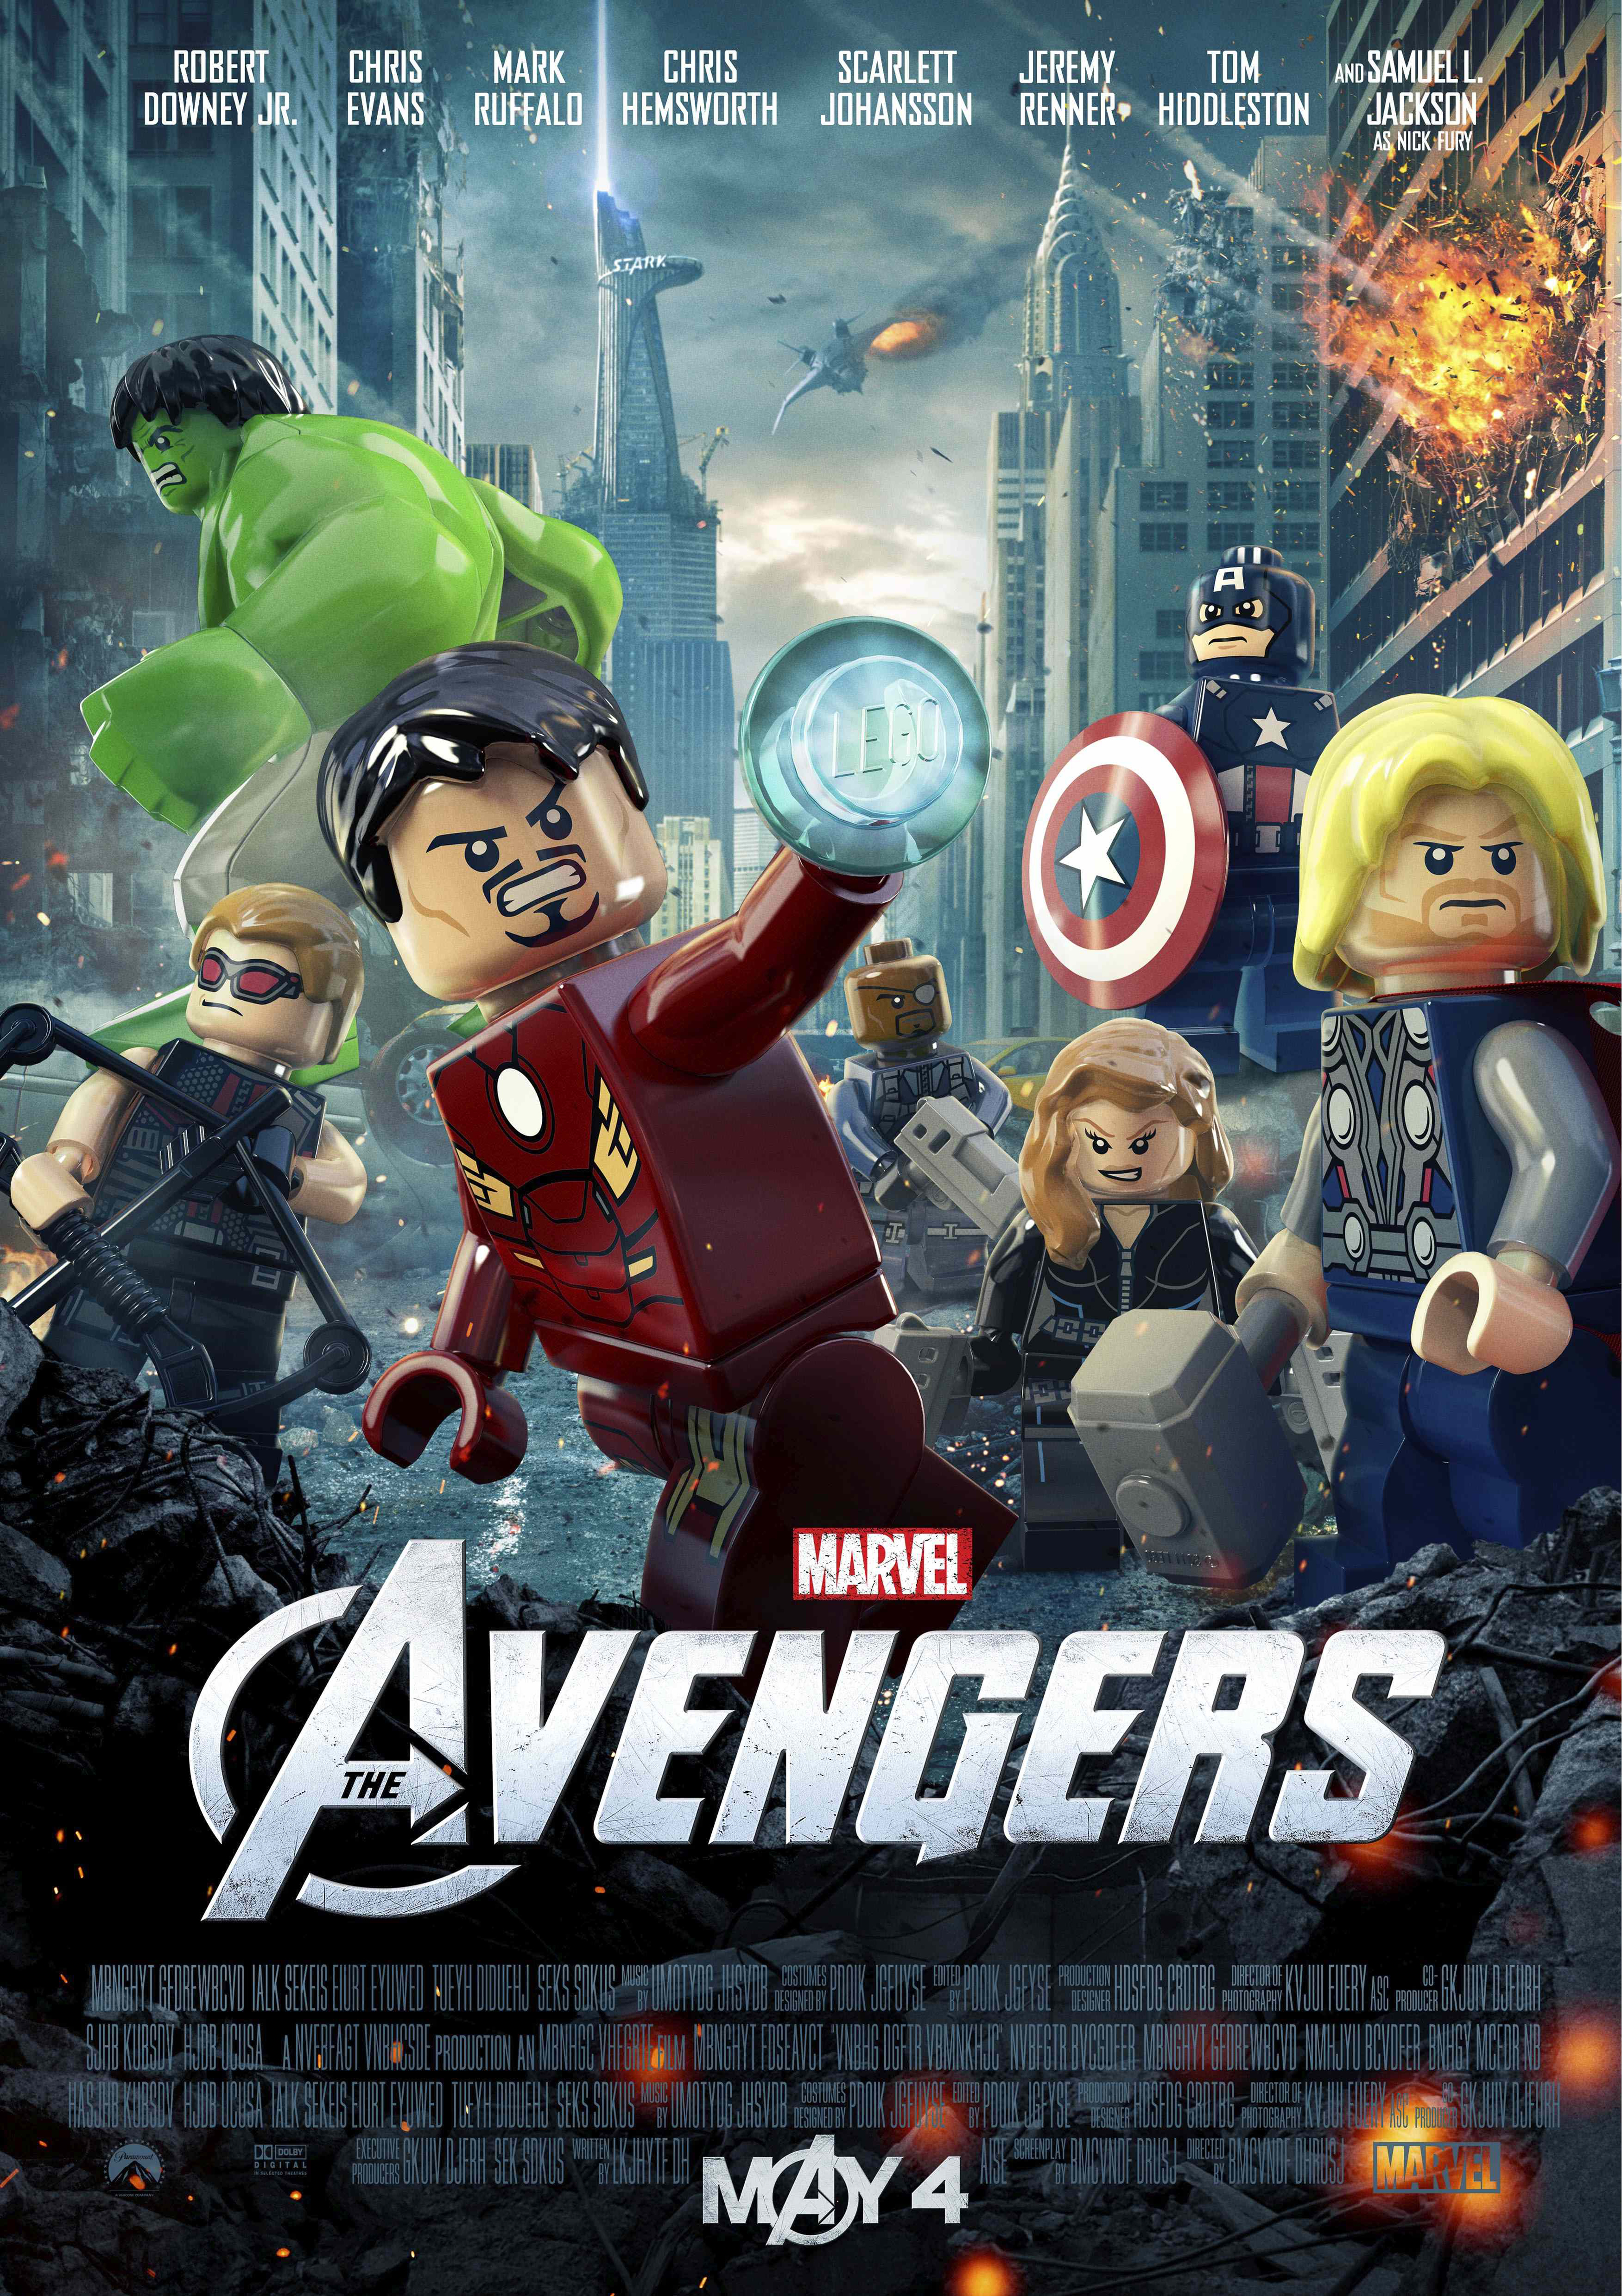 Image The Avengers Lego Poster2.jpg Brickipedia, the LEGO Wiki